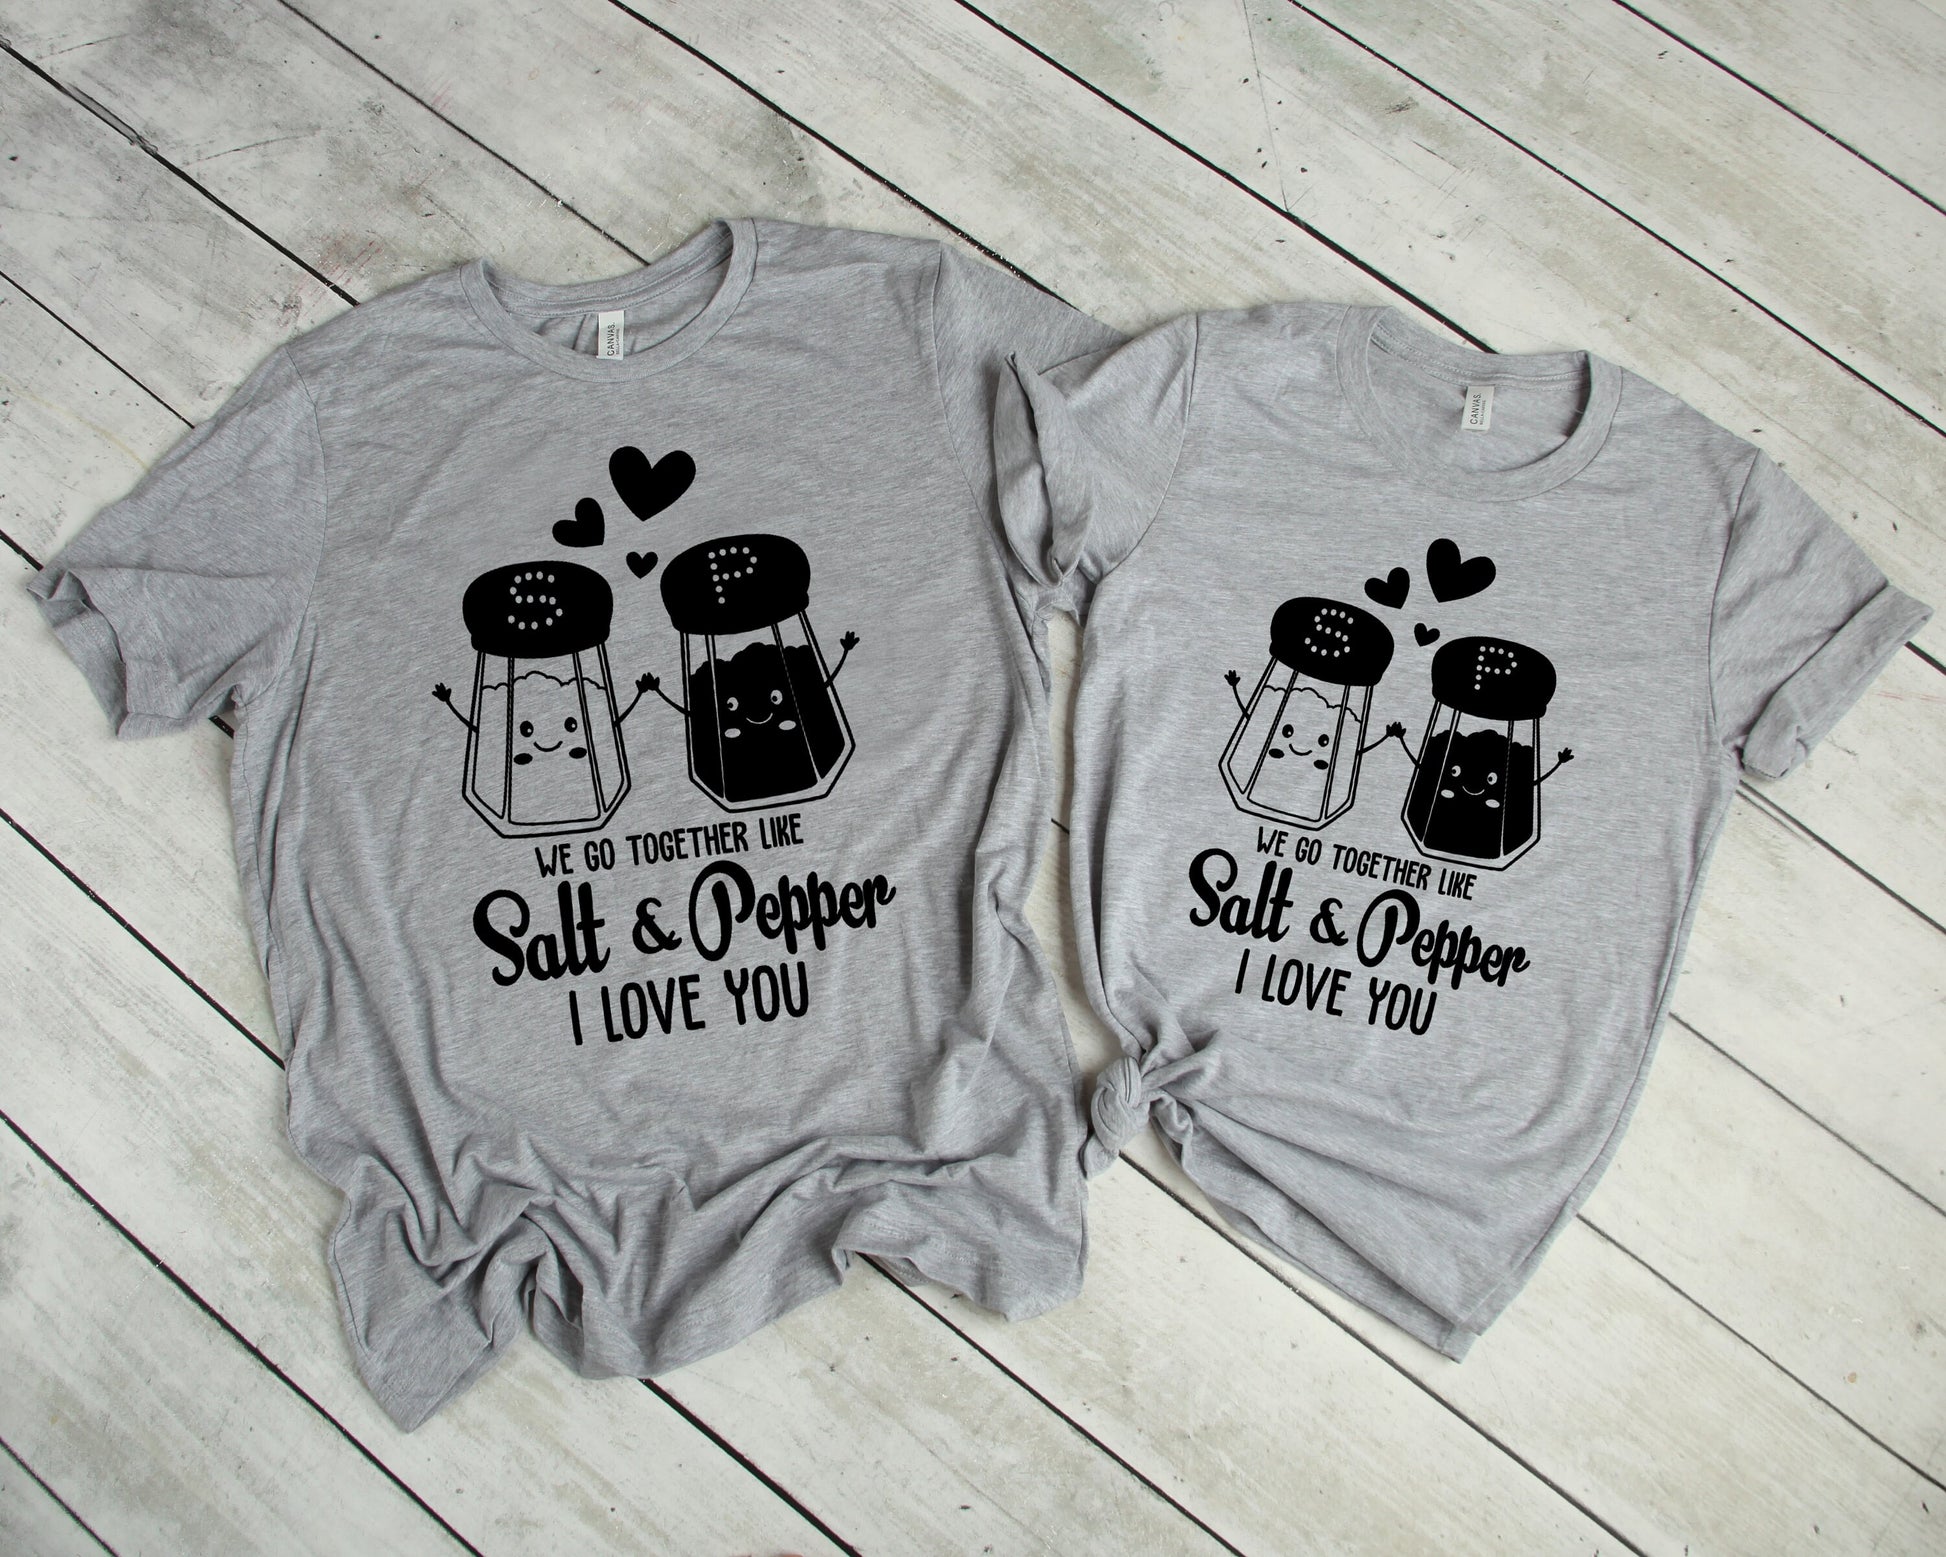 We Go Together Like Salt and Pepper Shirt - valentines day shirt, matching shirts, couple shirts, matching couple shirts